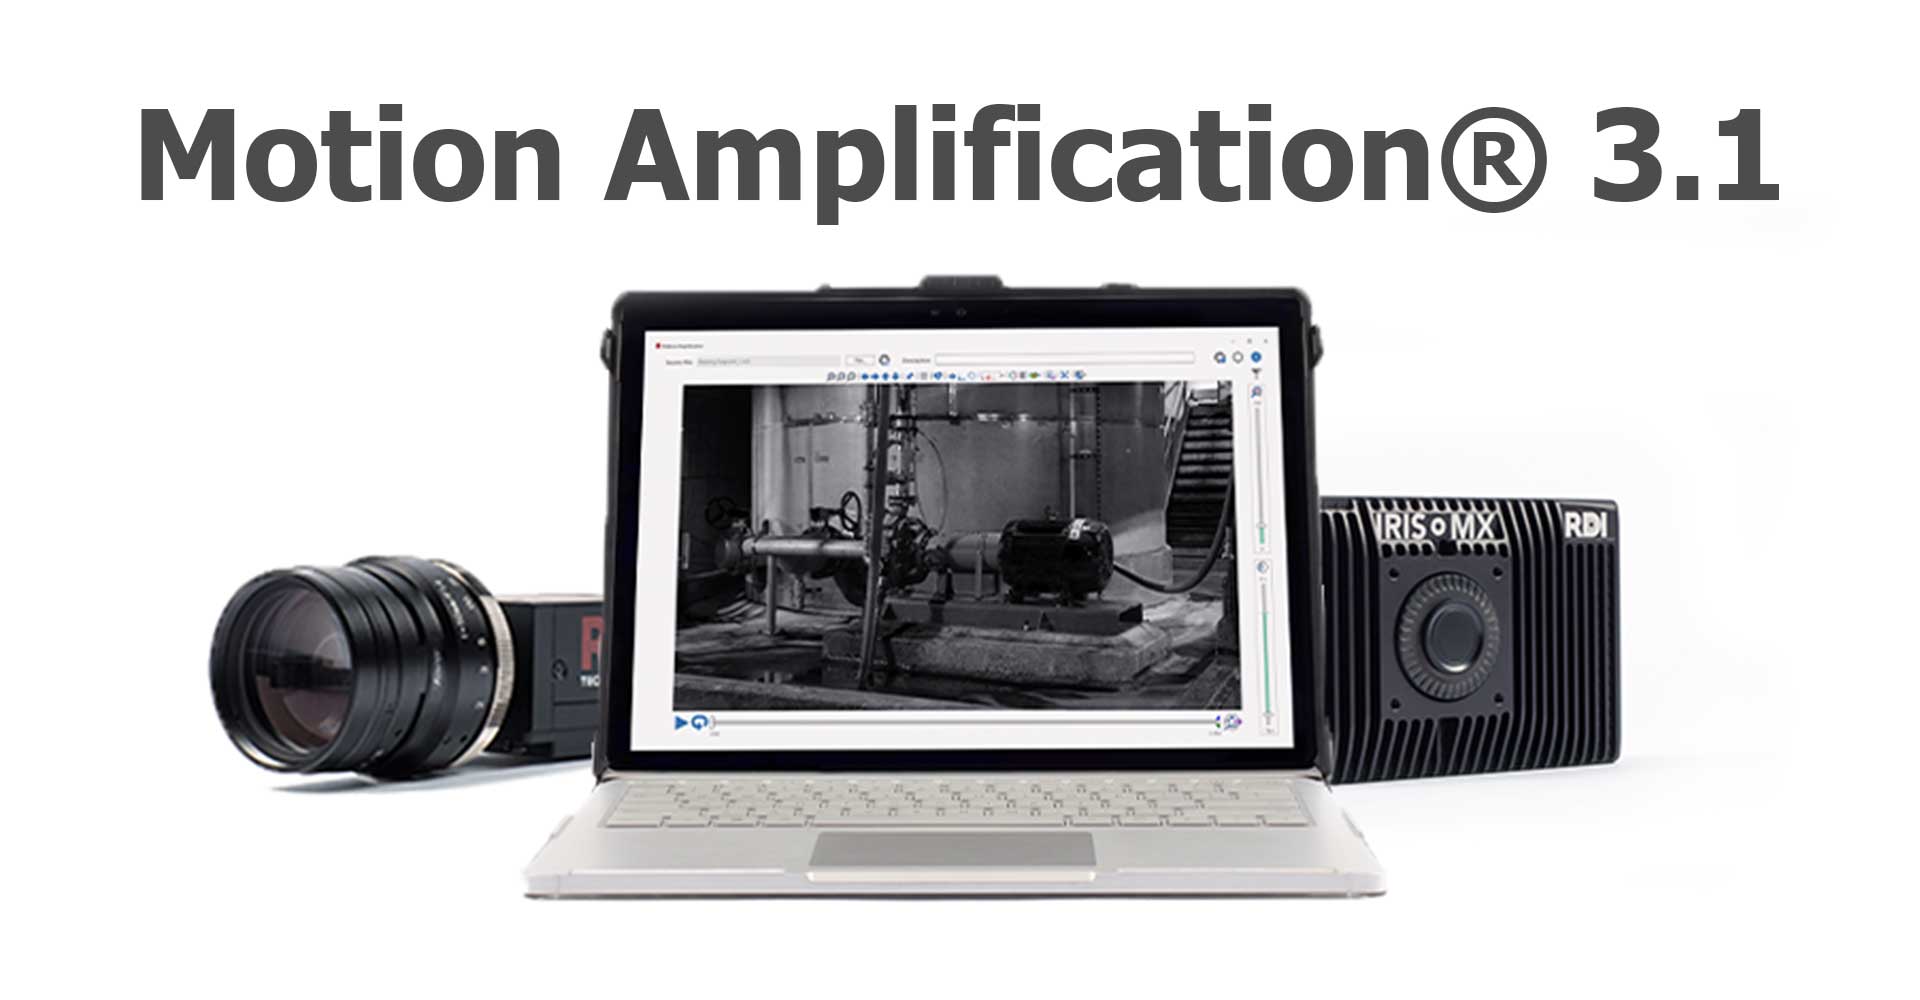 motion amplification 3.1